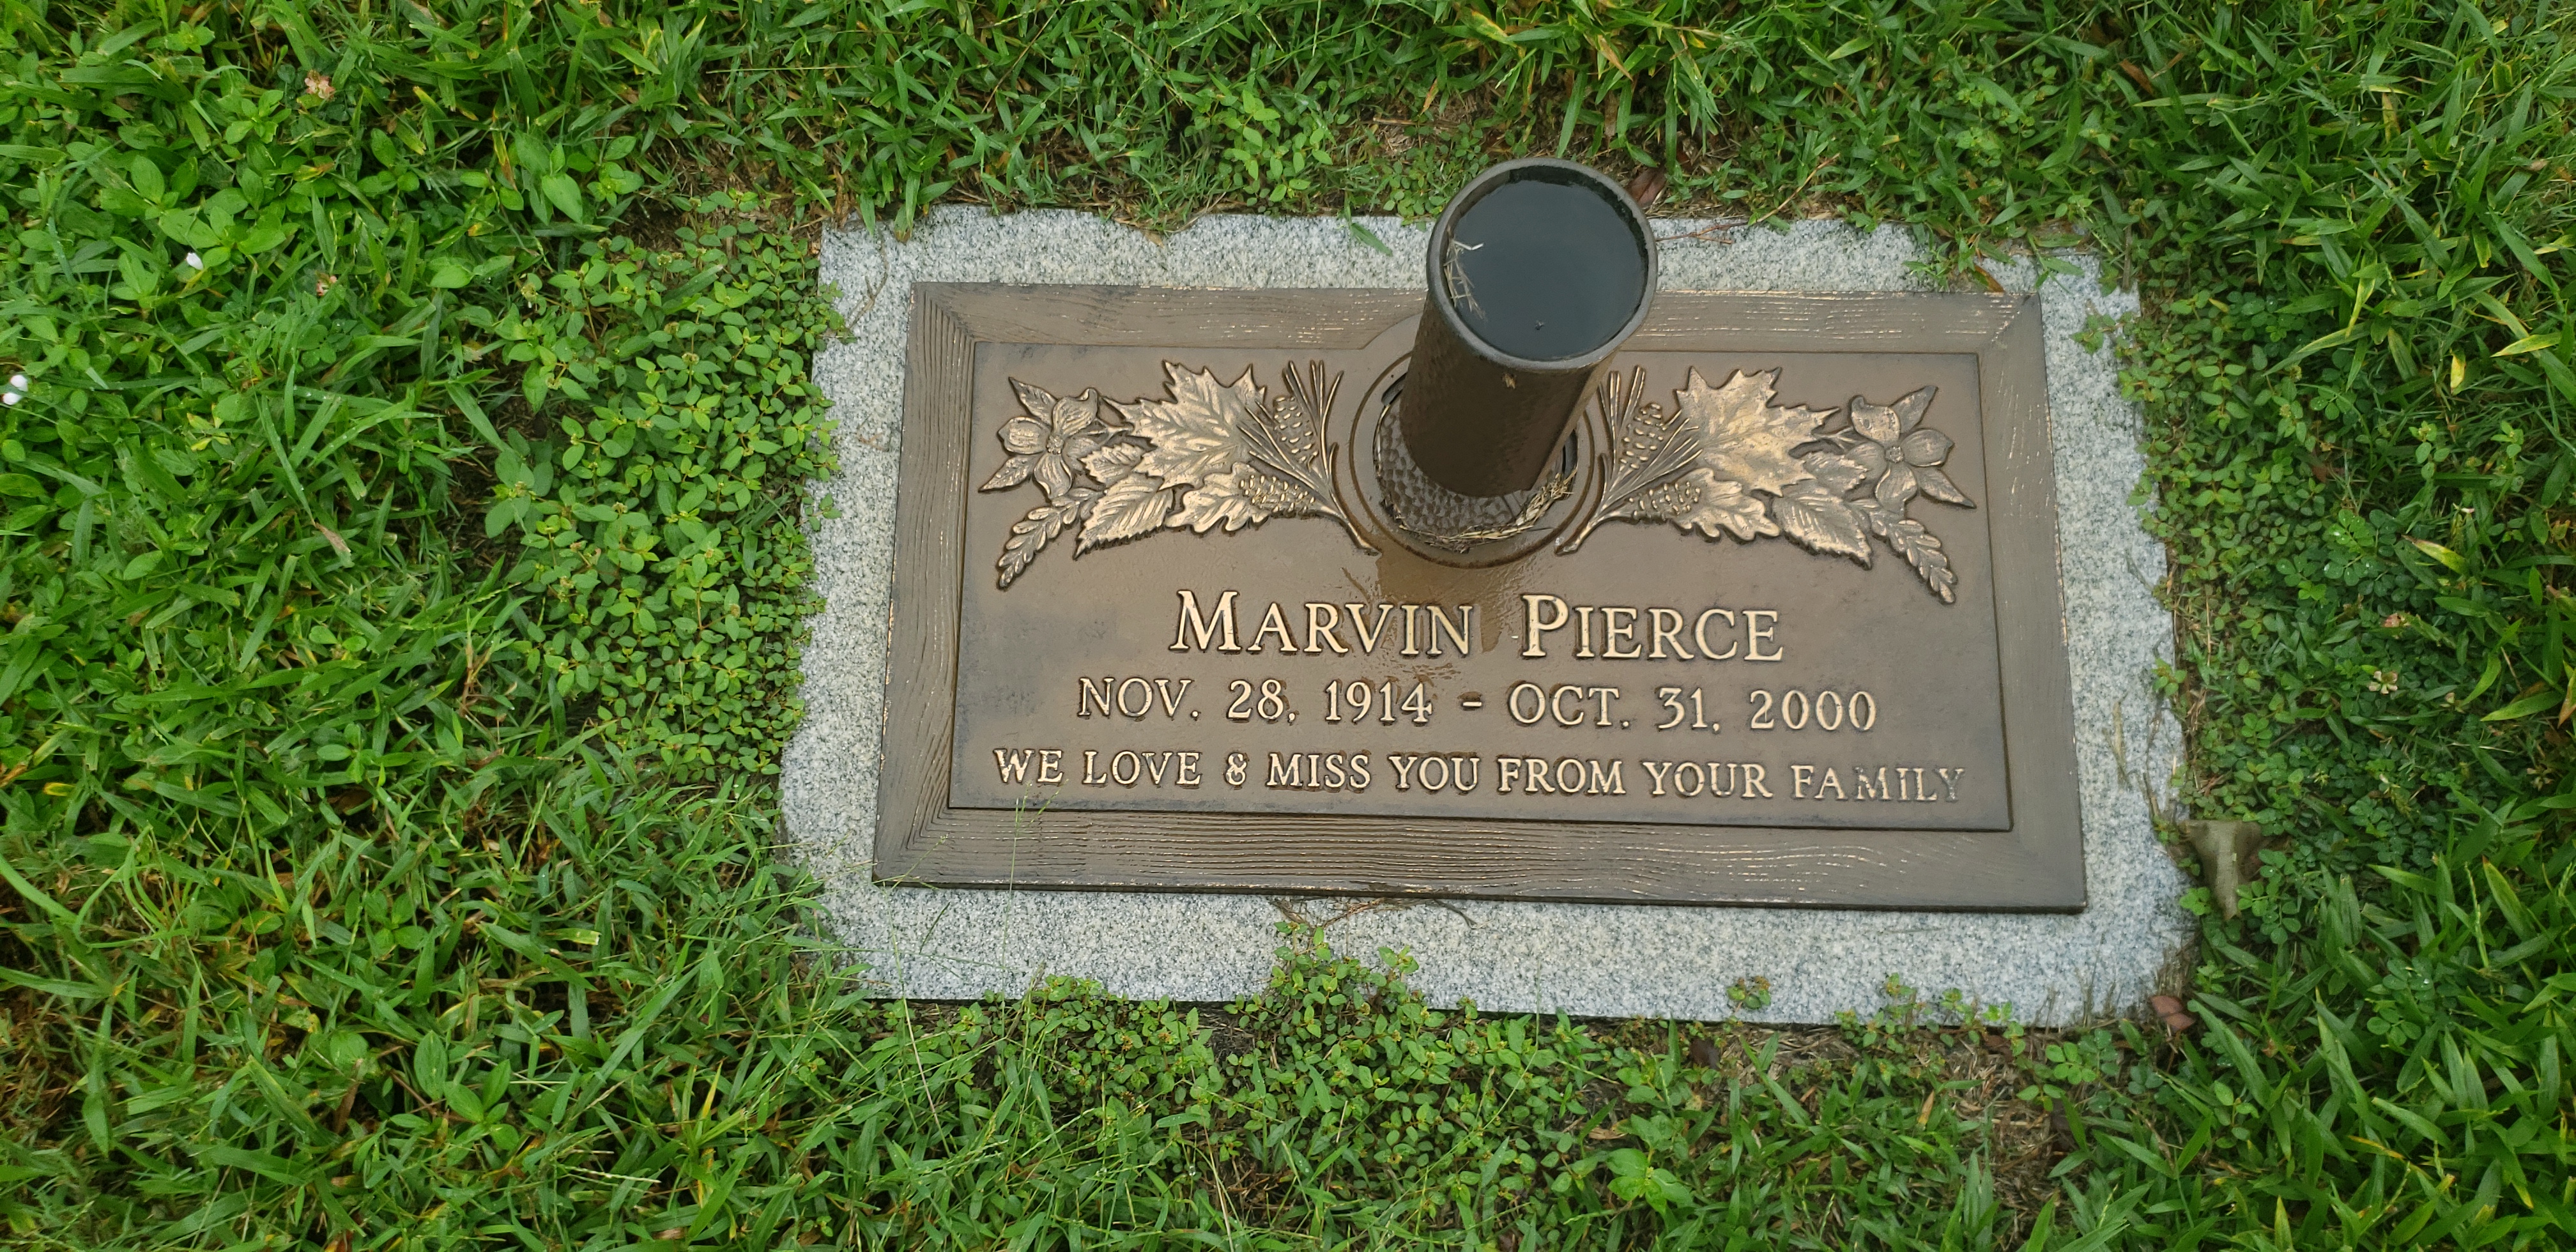 Marvin Pierce